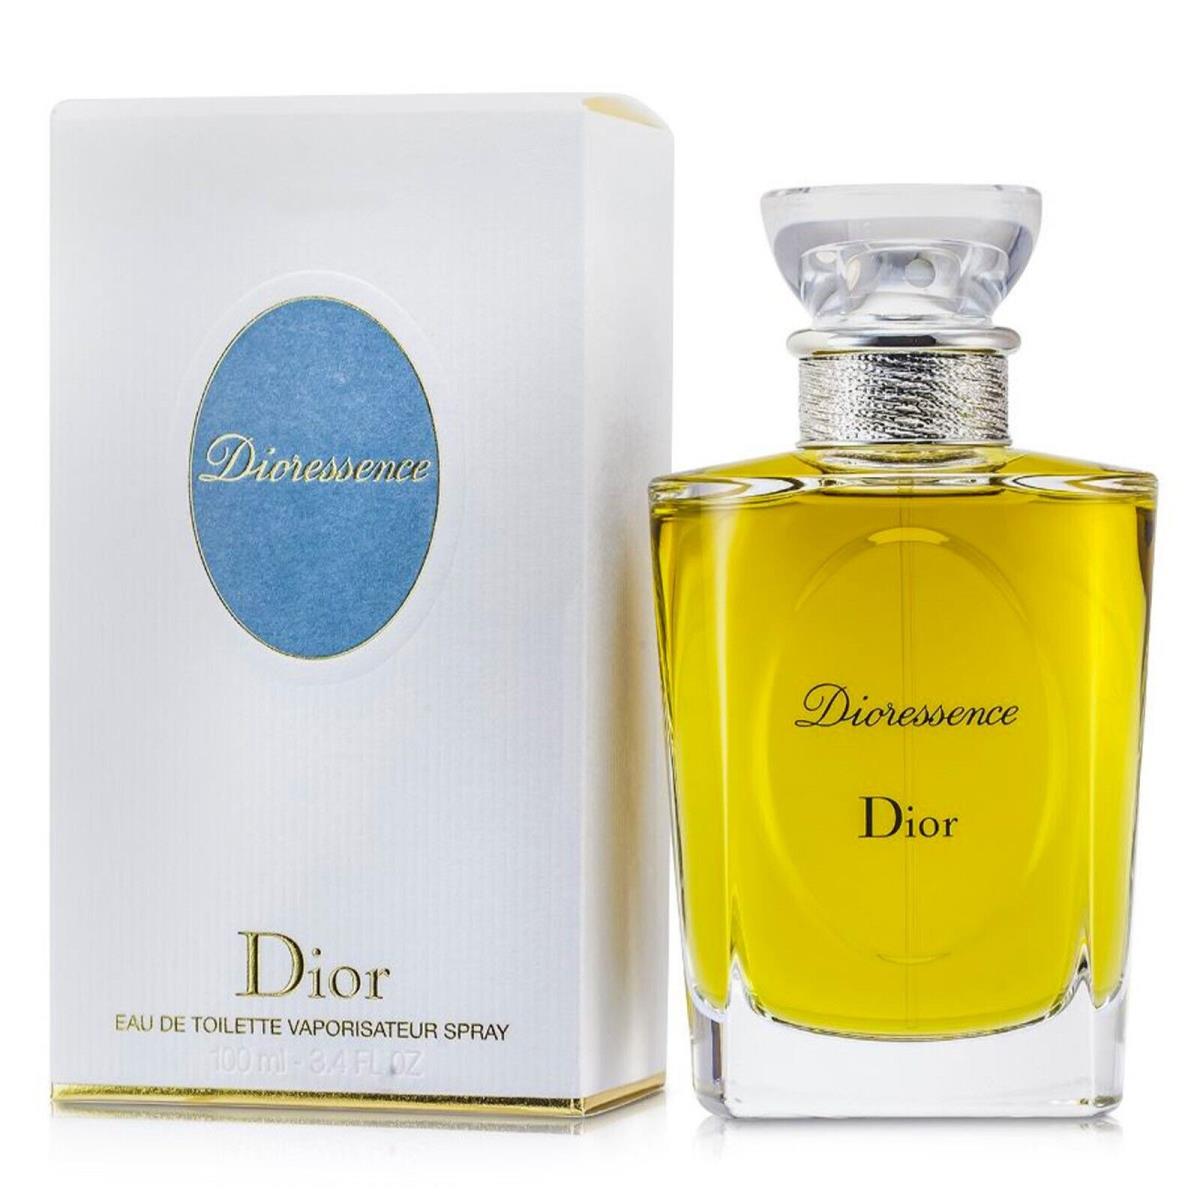 Dioressence Perfume by Christian Dior Women Eau De Toilette Edt Spray 3.4 oz